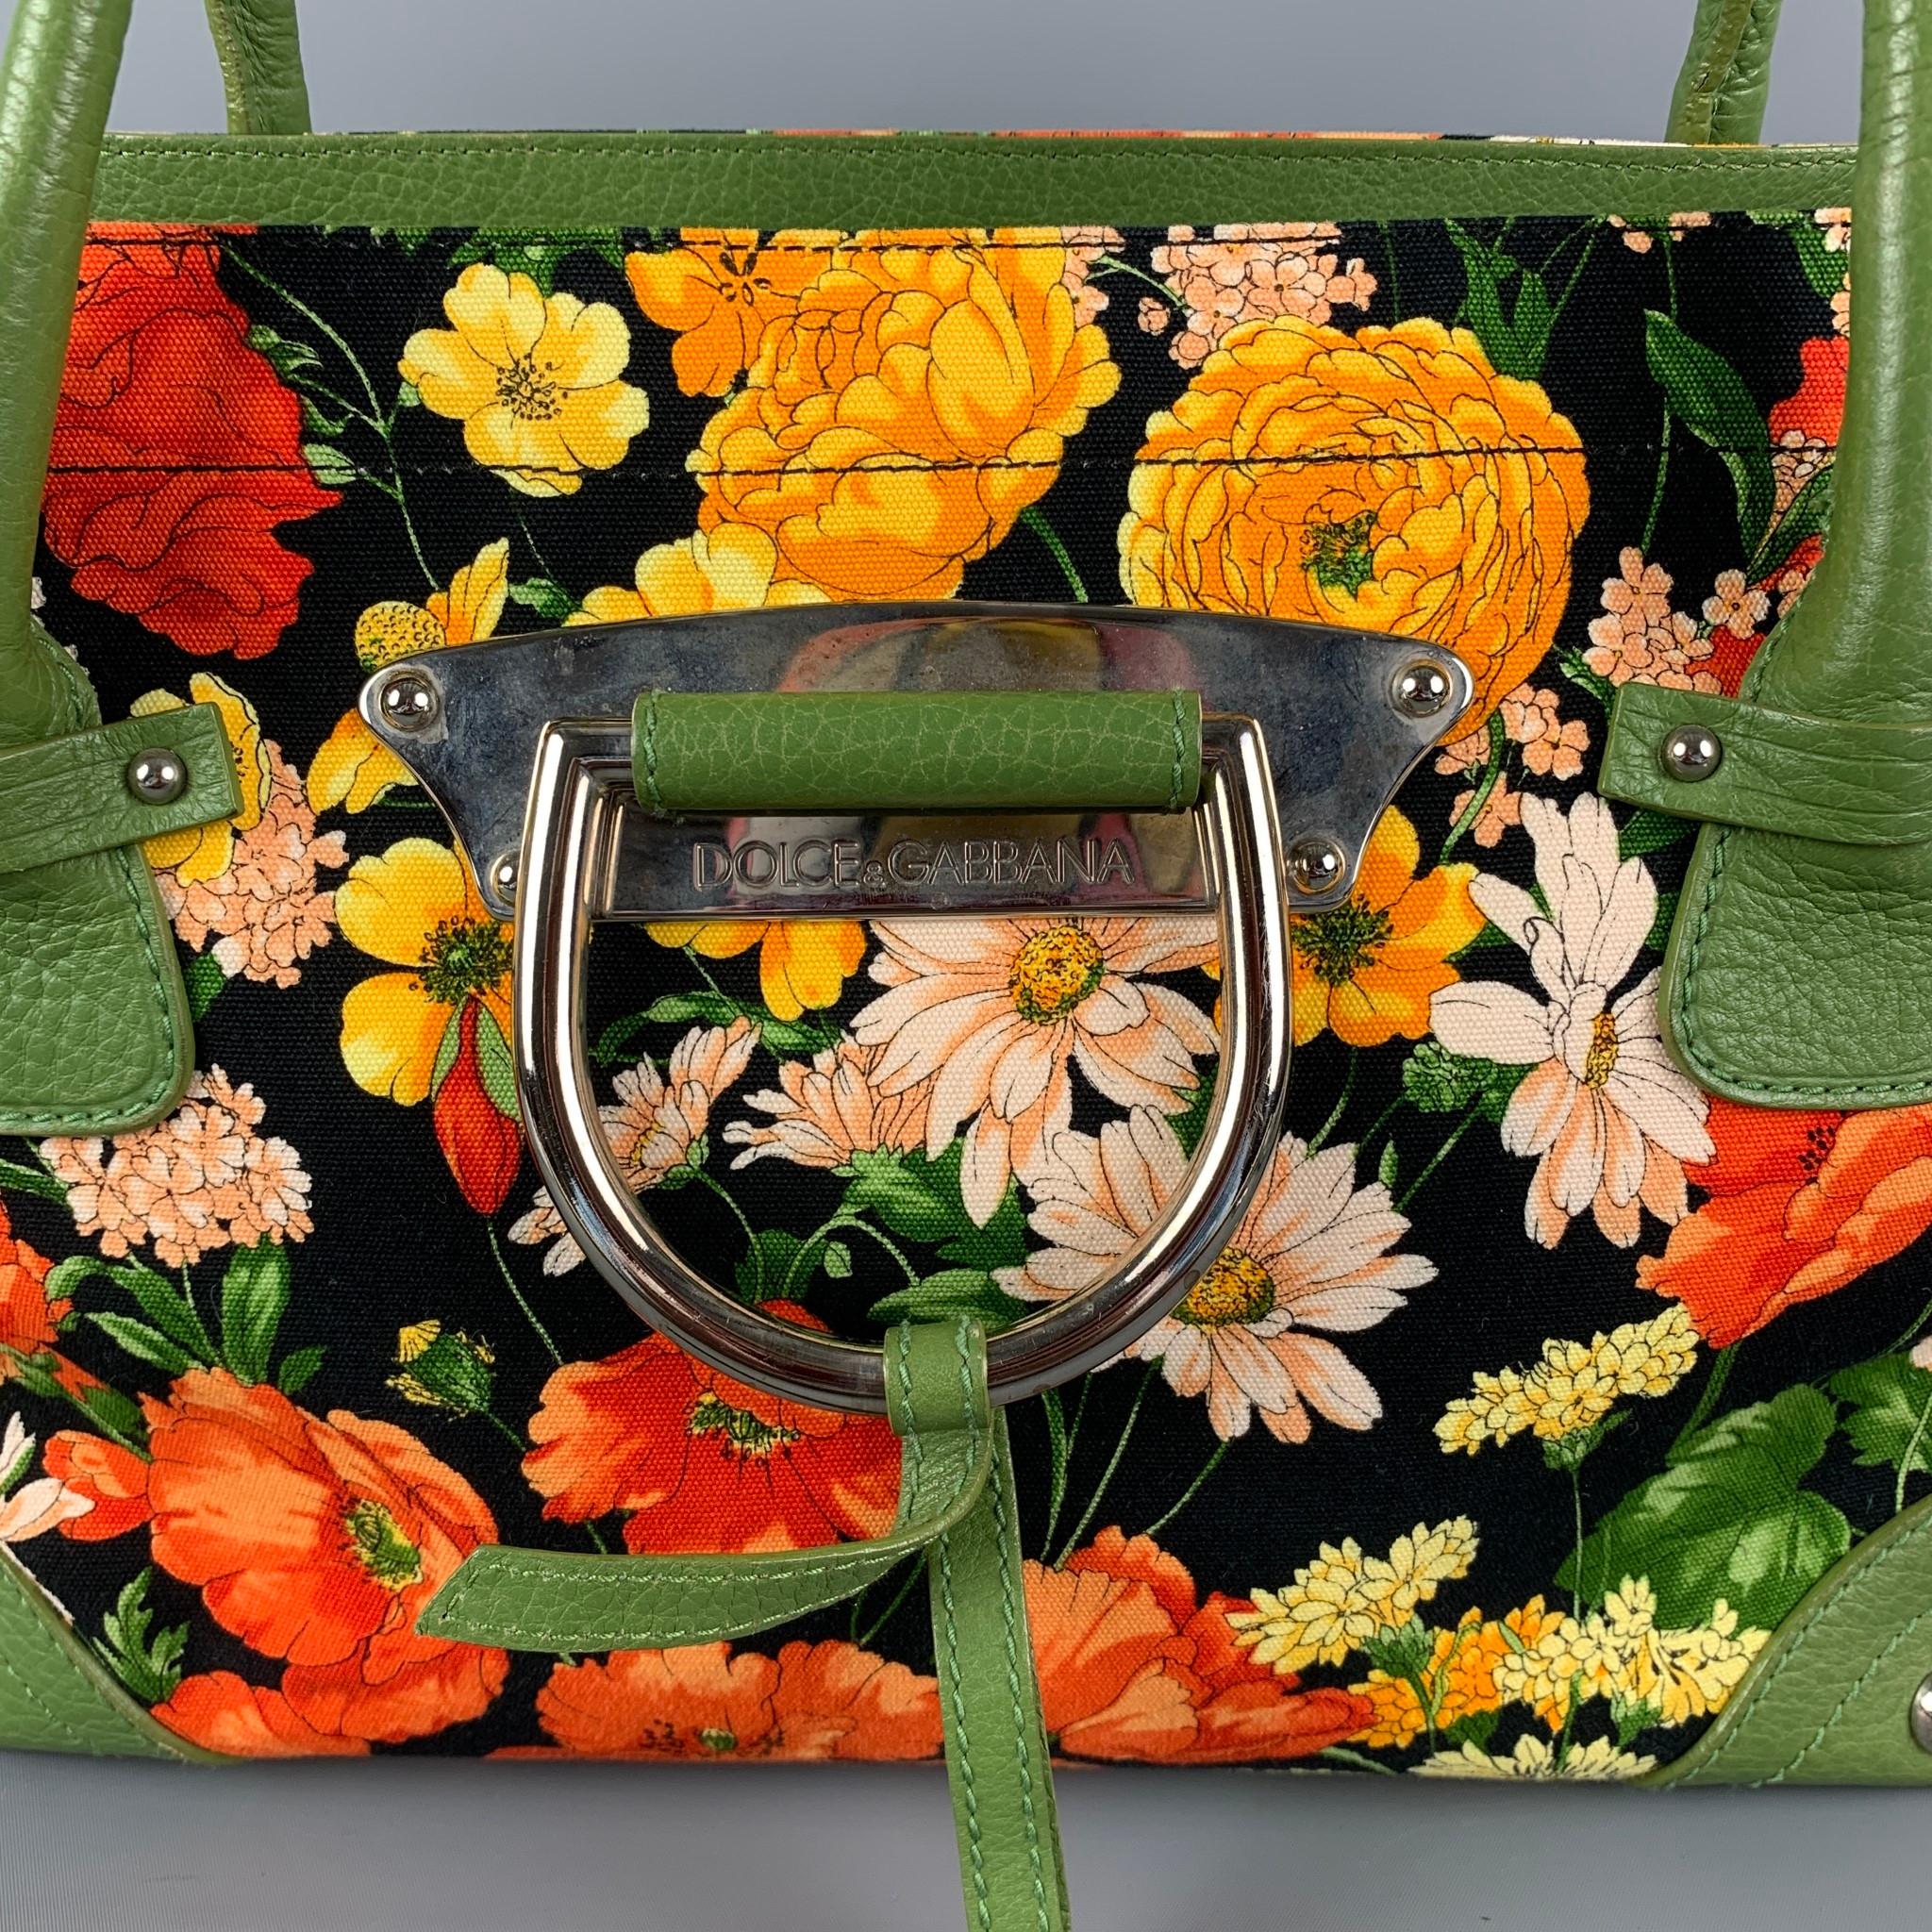 Women's DOLCE & GABBANA Green Orange Floral Canvas Tote Handbag